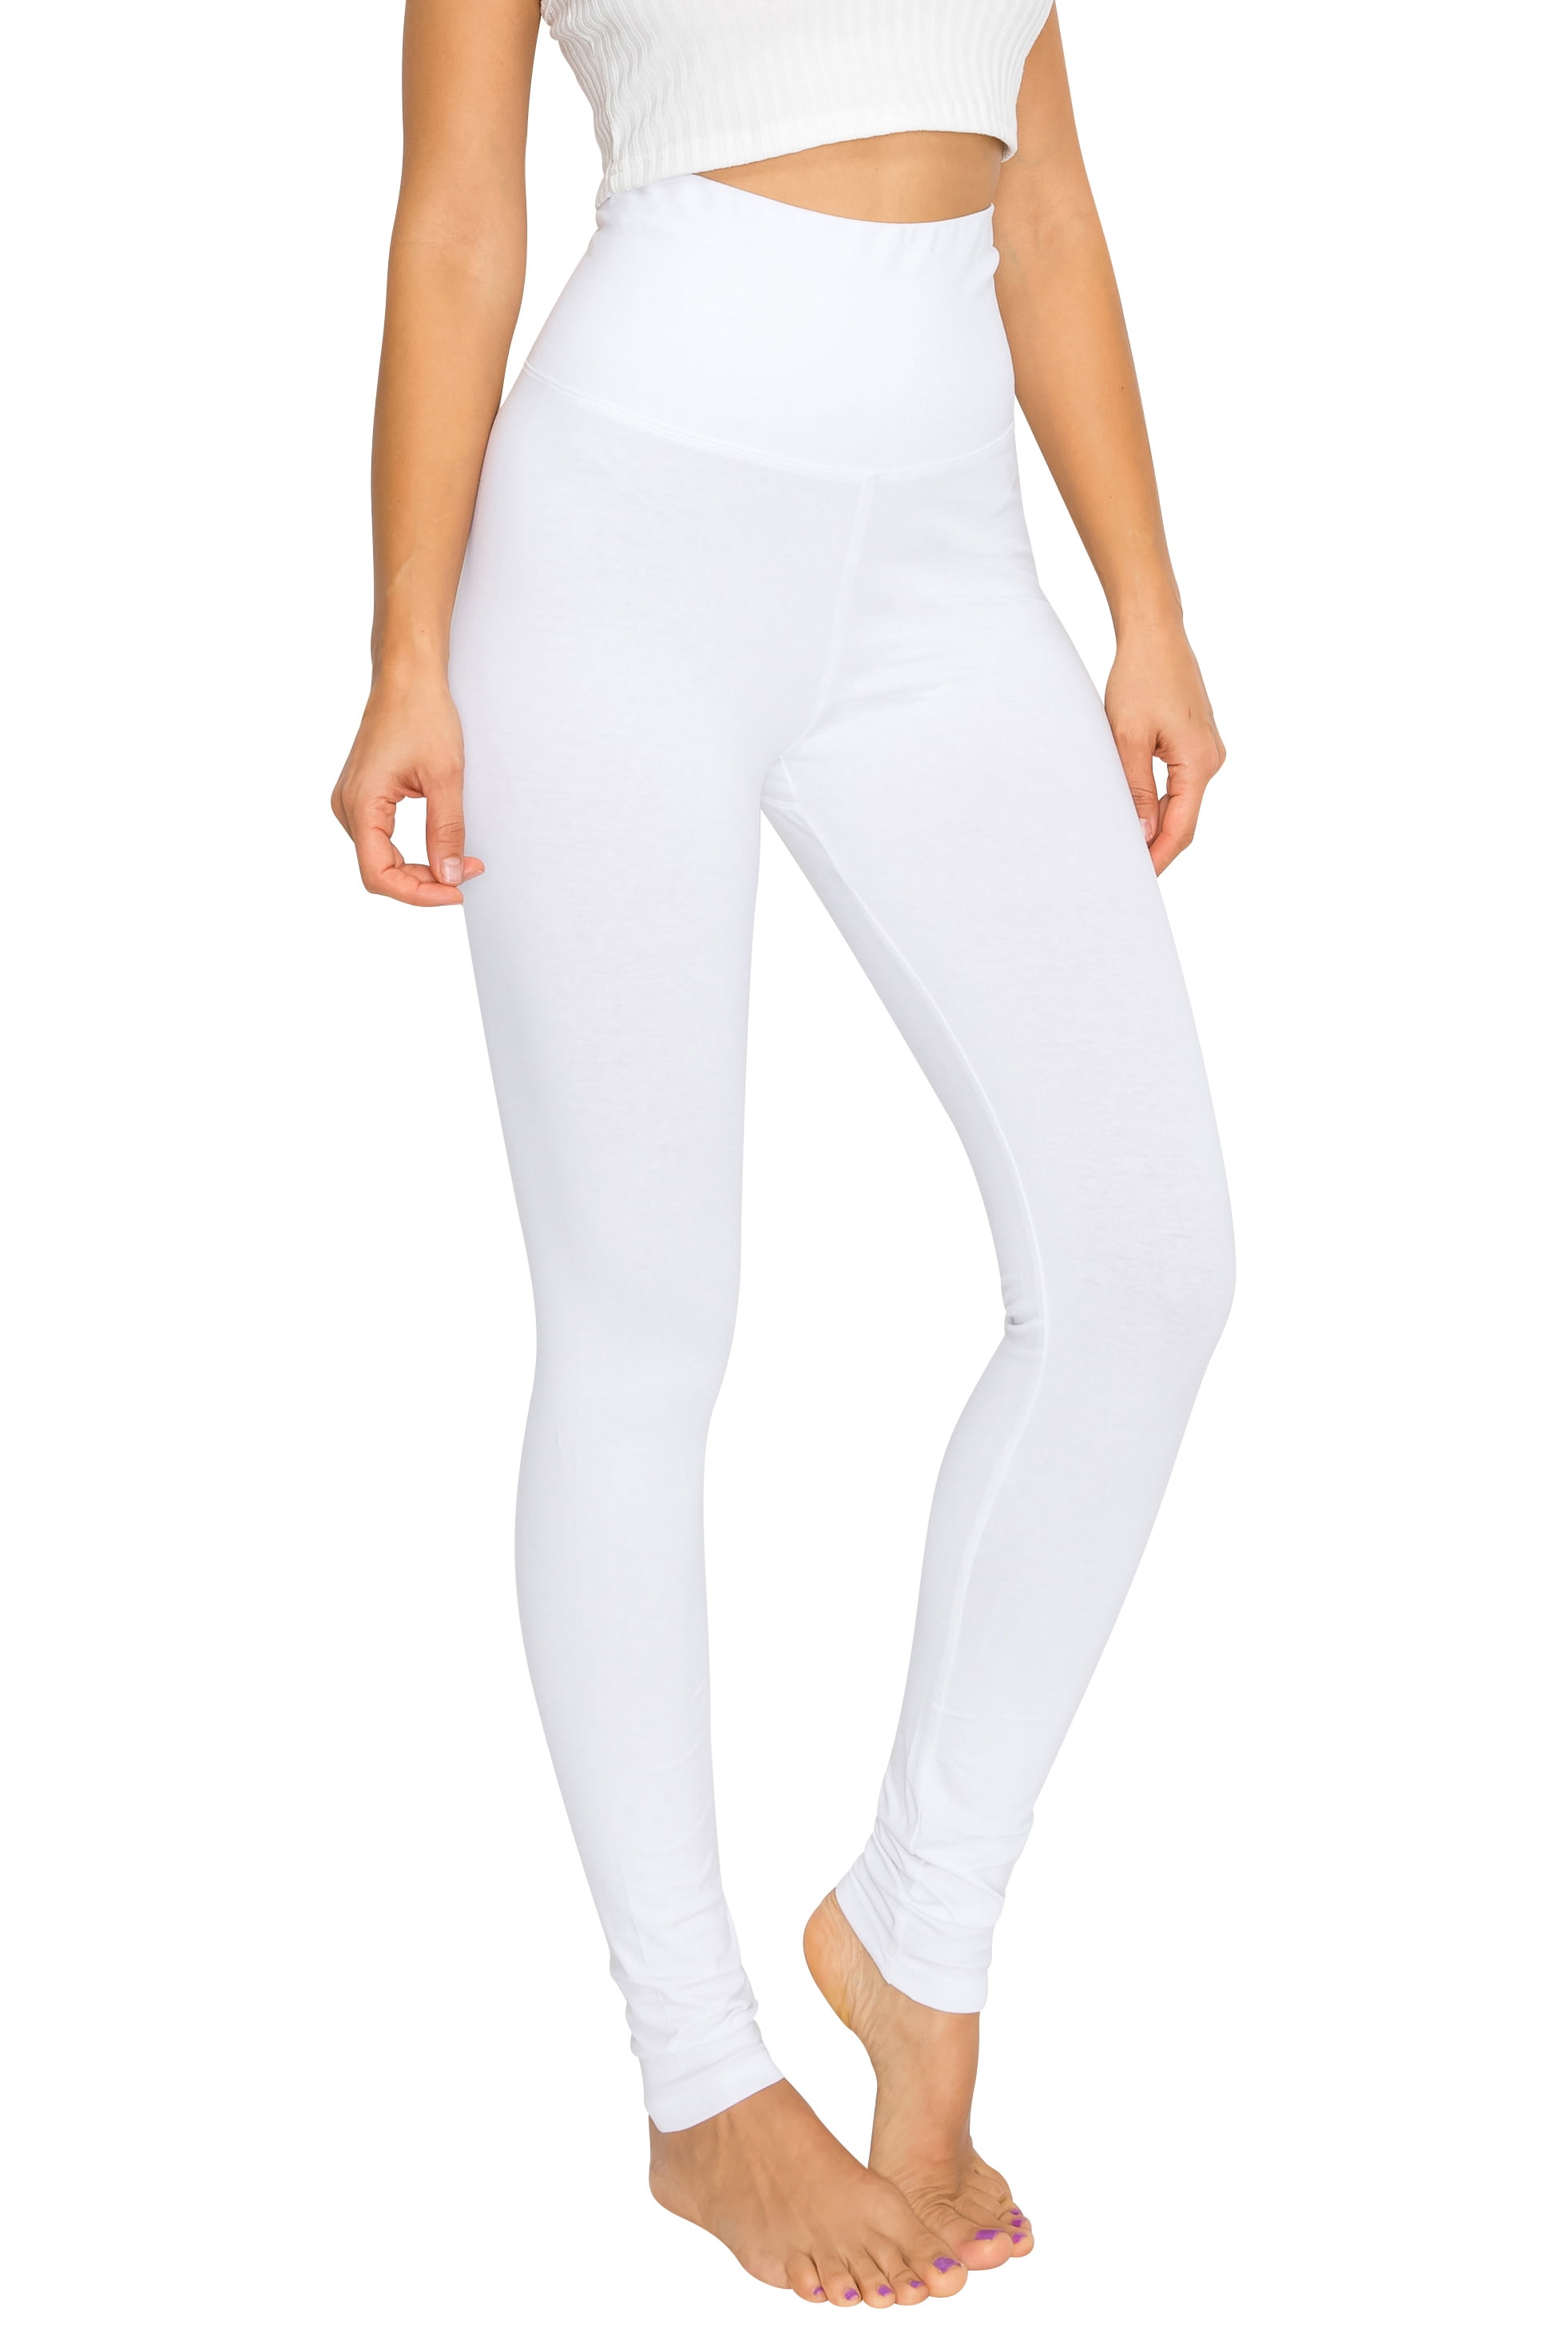 EttelLut-Women's Cotton and Spandex High Waist Activewear Leggings Pants-White  S 